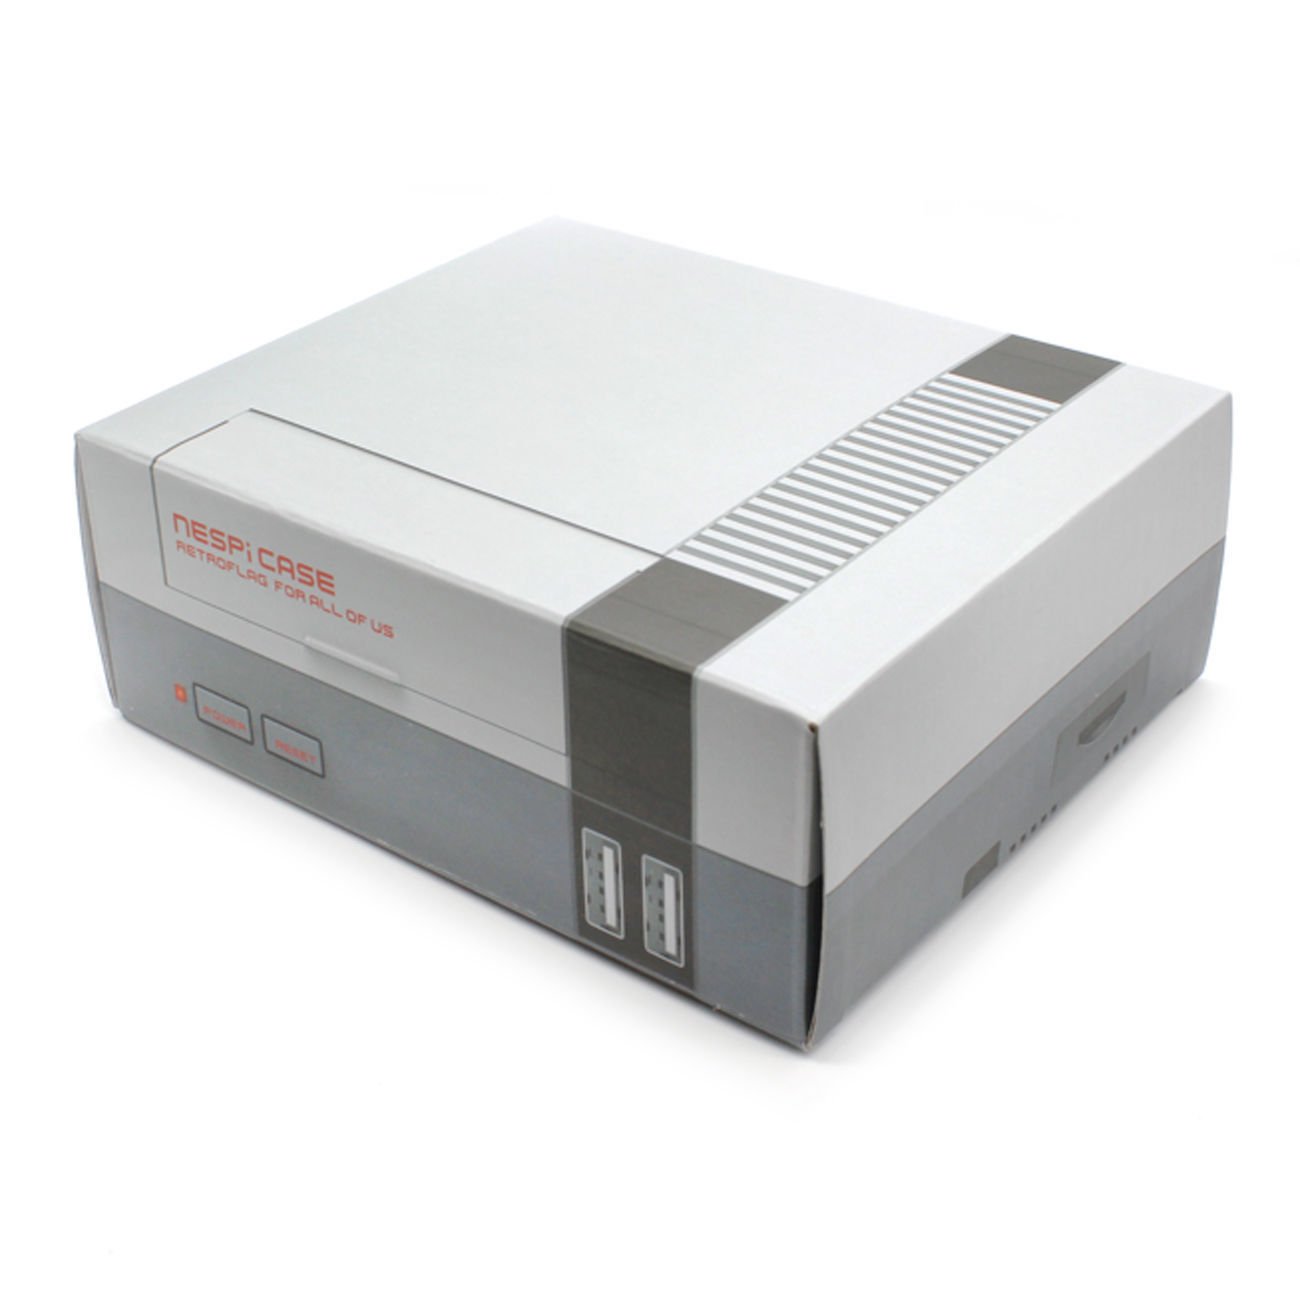 Classic Retro Tools NES case for Raspberry Pi 3, 2 and B+ (gray)